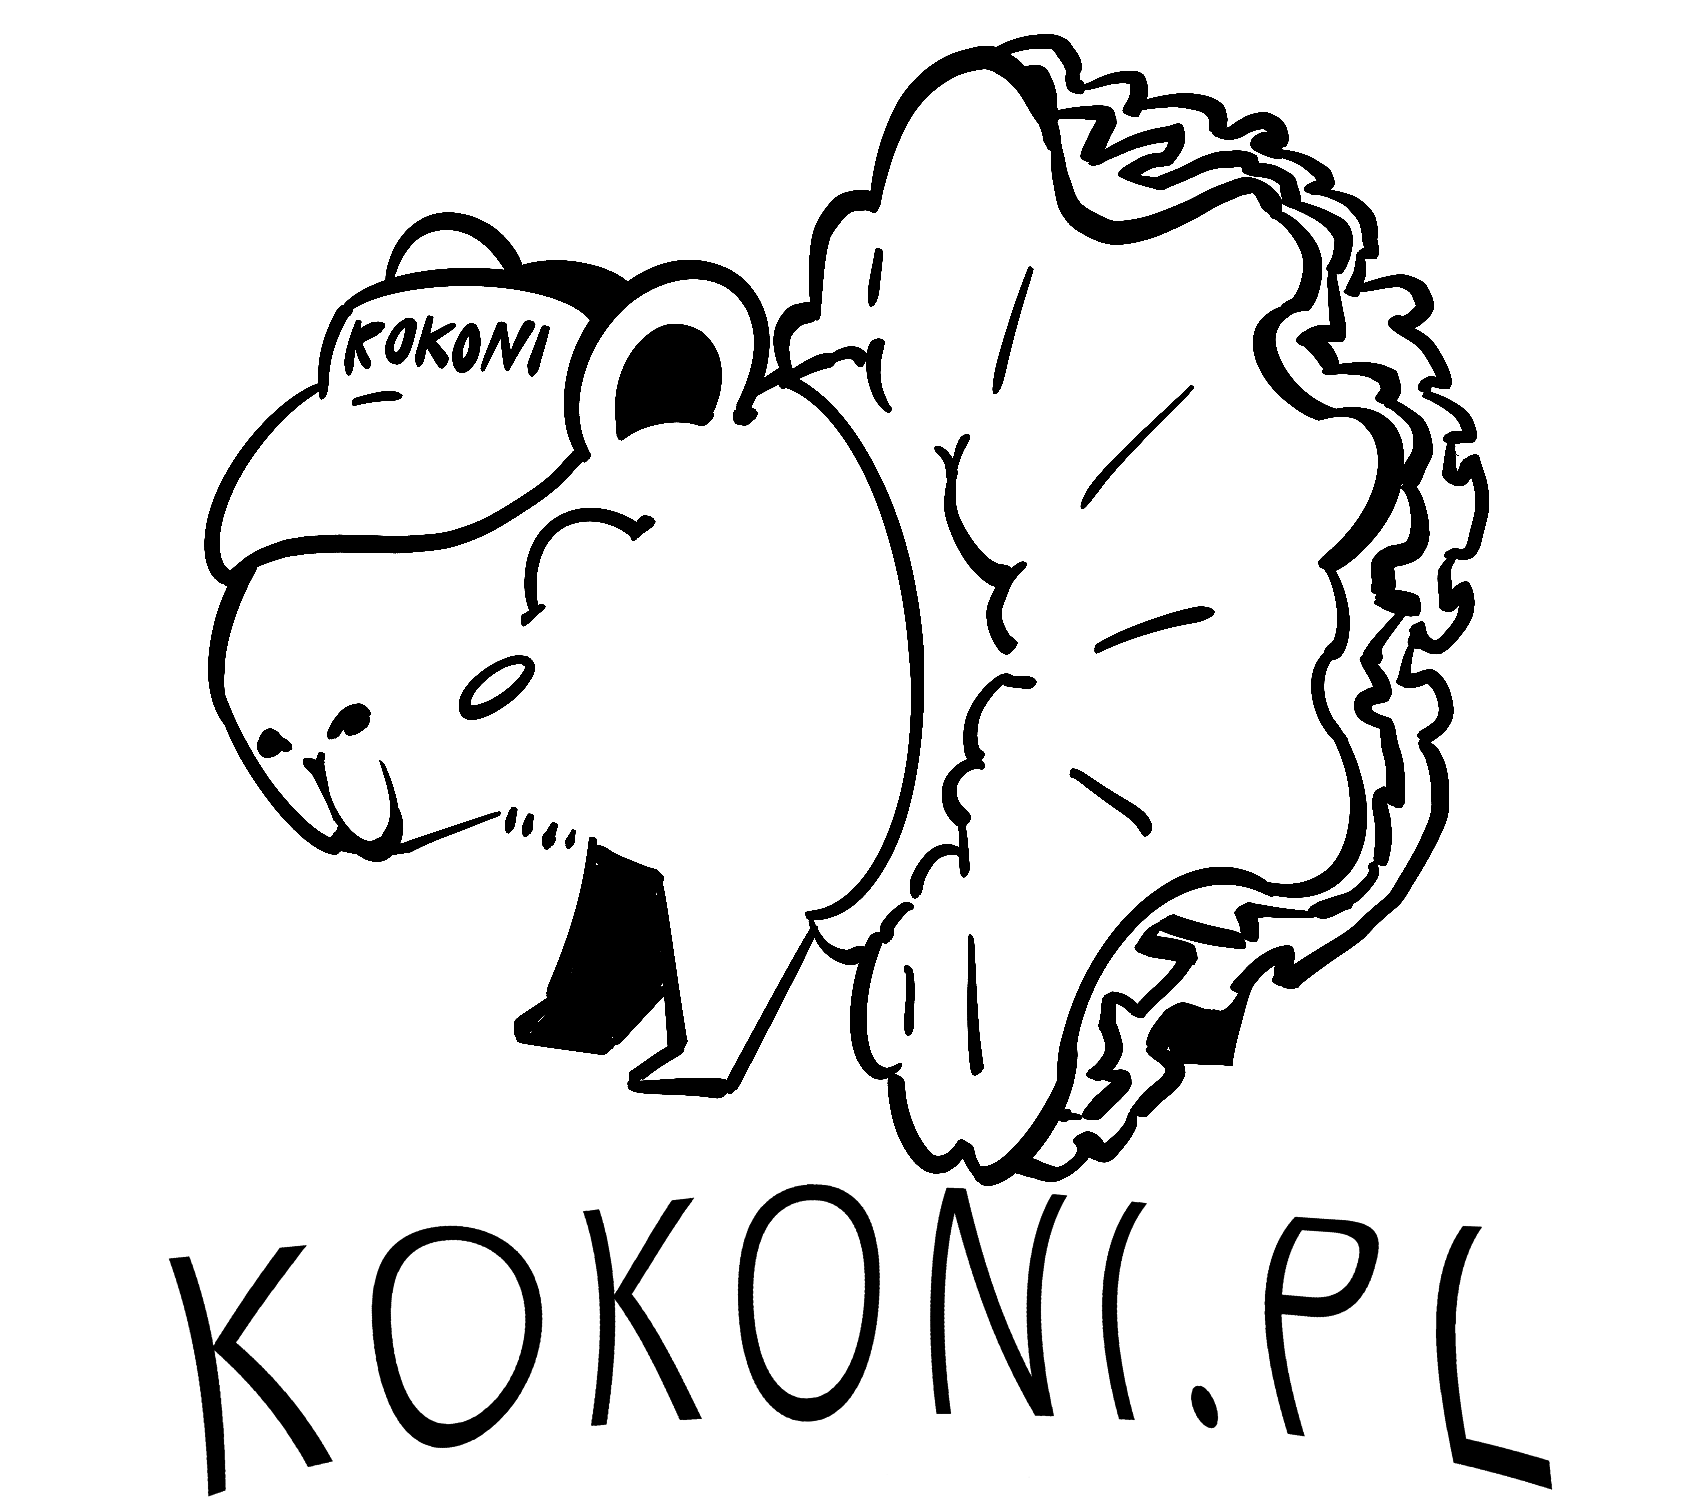 Kokoni.pl